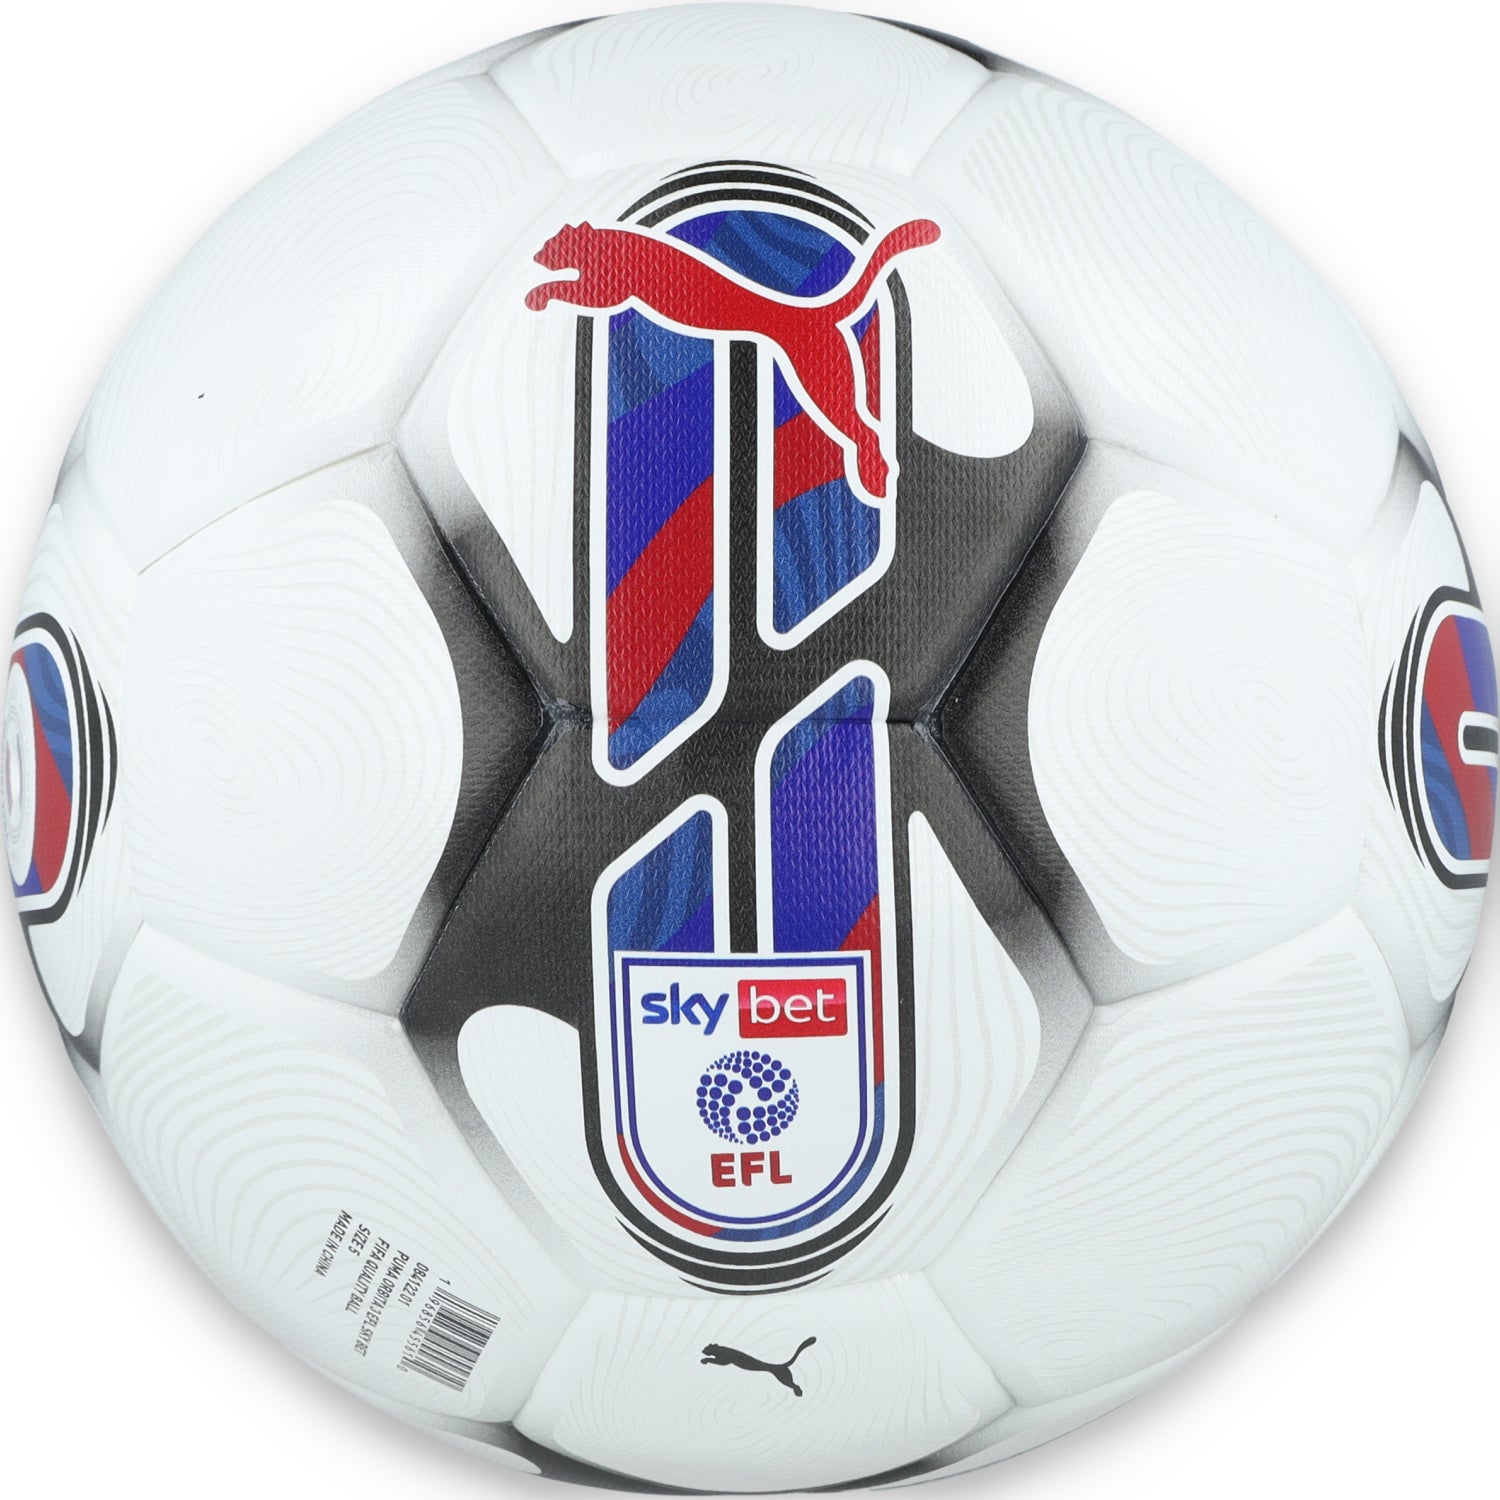 Puma Orbita 3 EFL Sky Bet FIFA Quality Soccer Ball